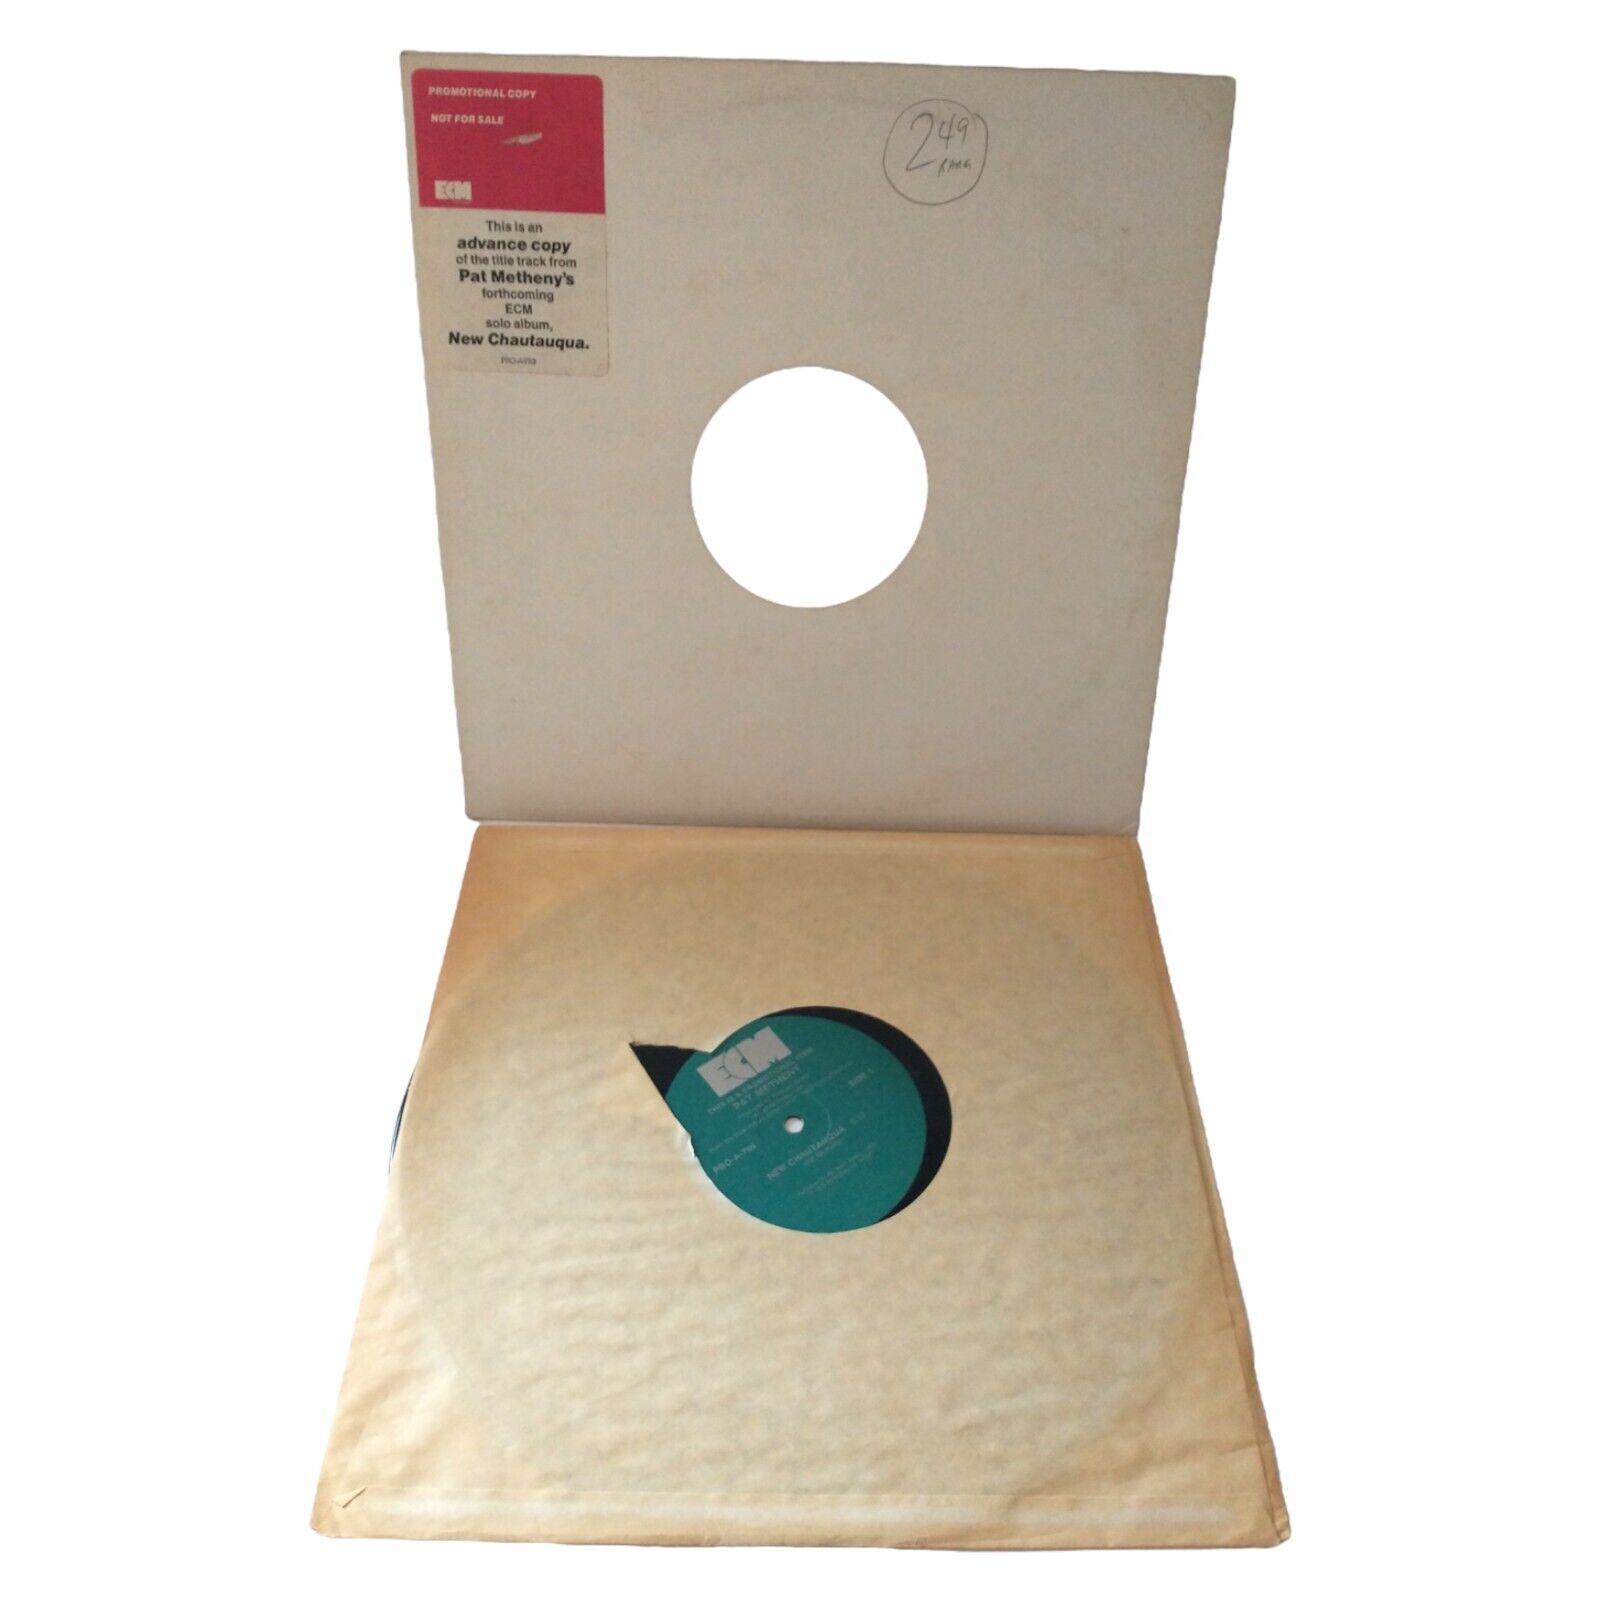 Pat Metheny Promotional Record Chautauqua 1979 33RPM Vinyl Copy  Ecm Album 